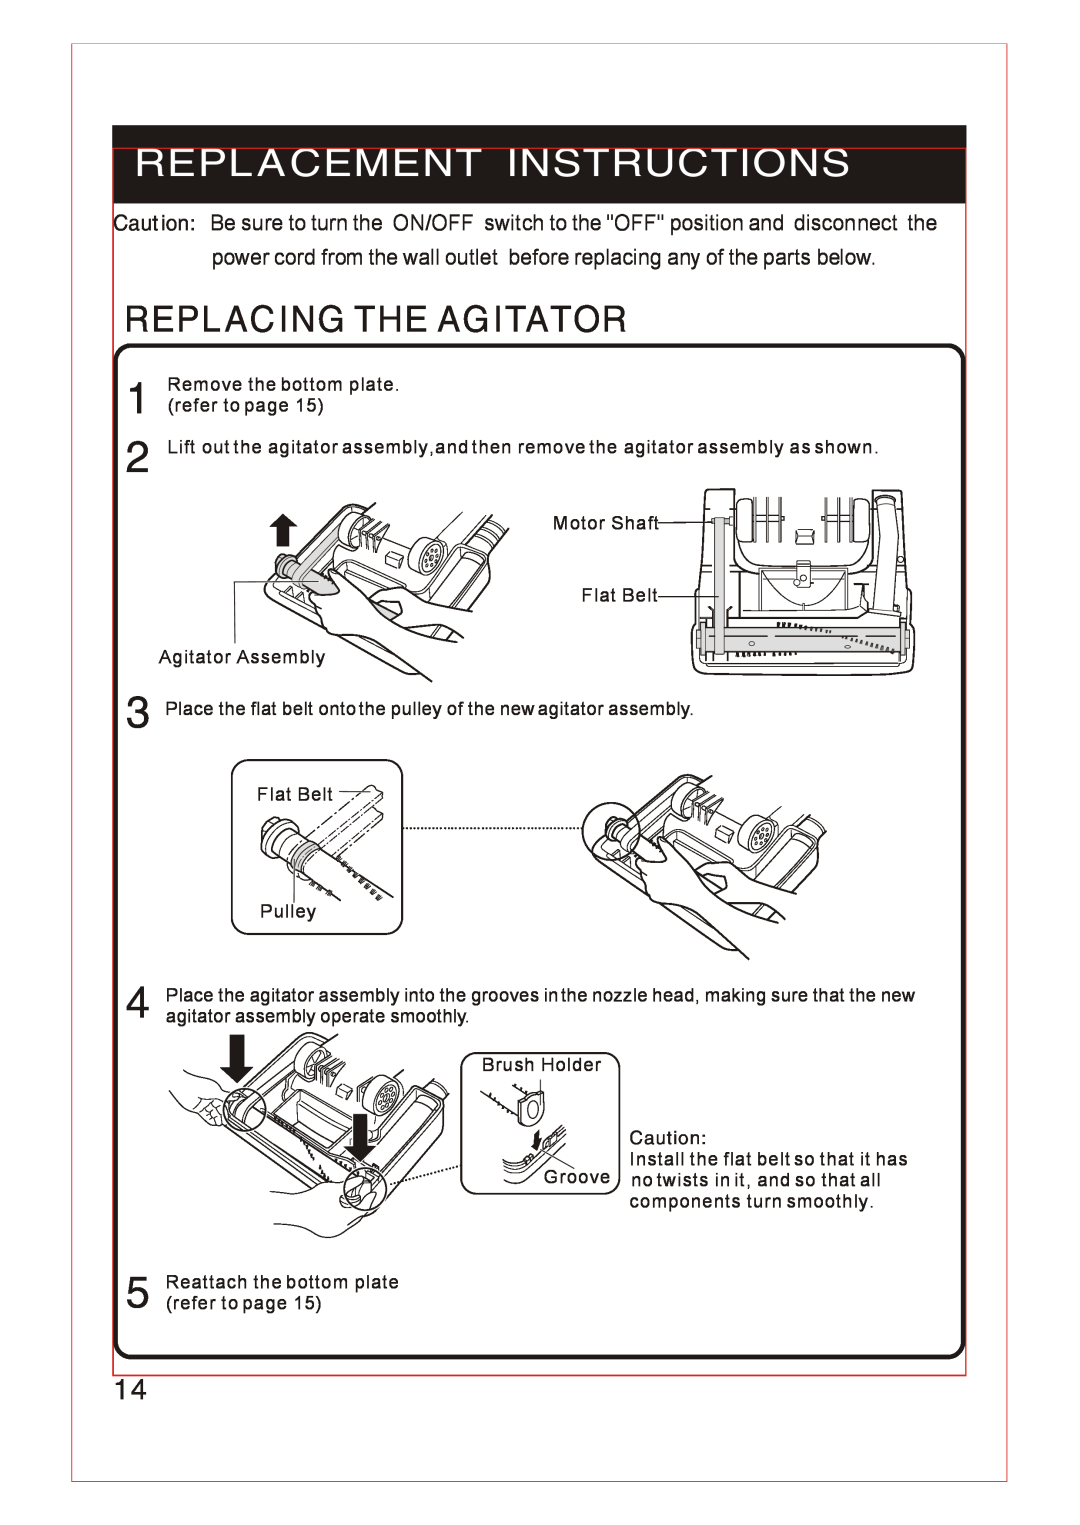 Fantom Vacuum FM740 B instruction manual Replacing The Agitator, Replacement Instructions 